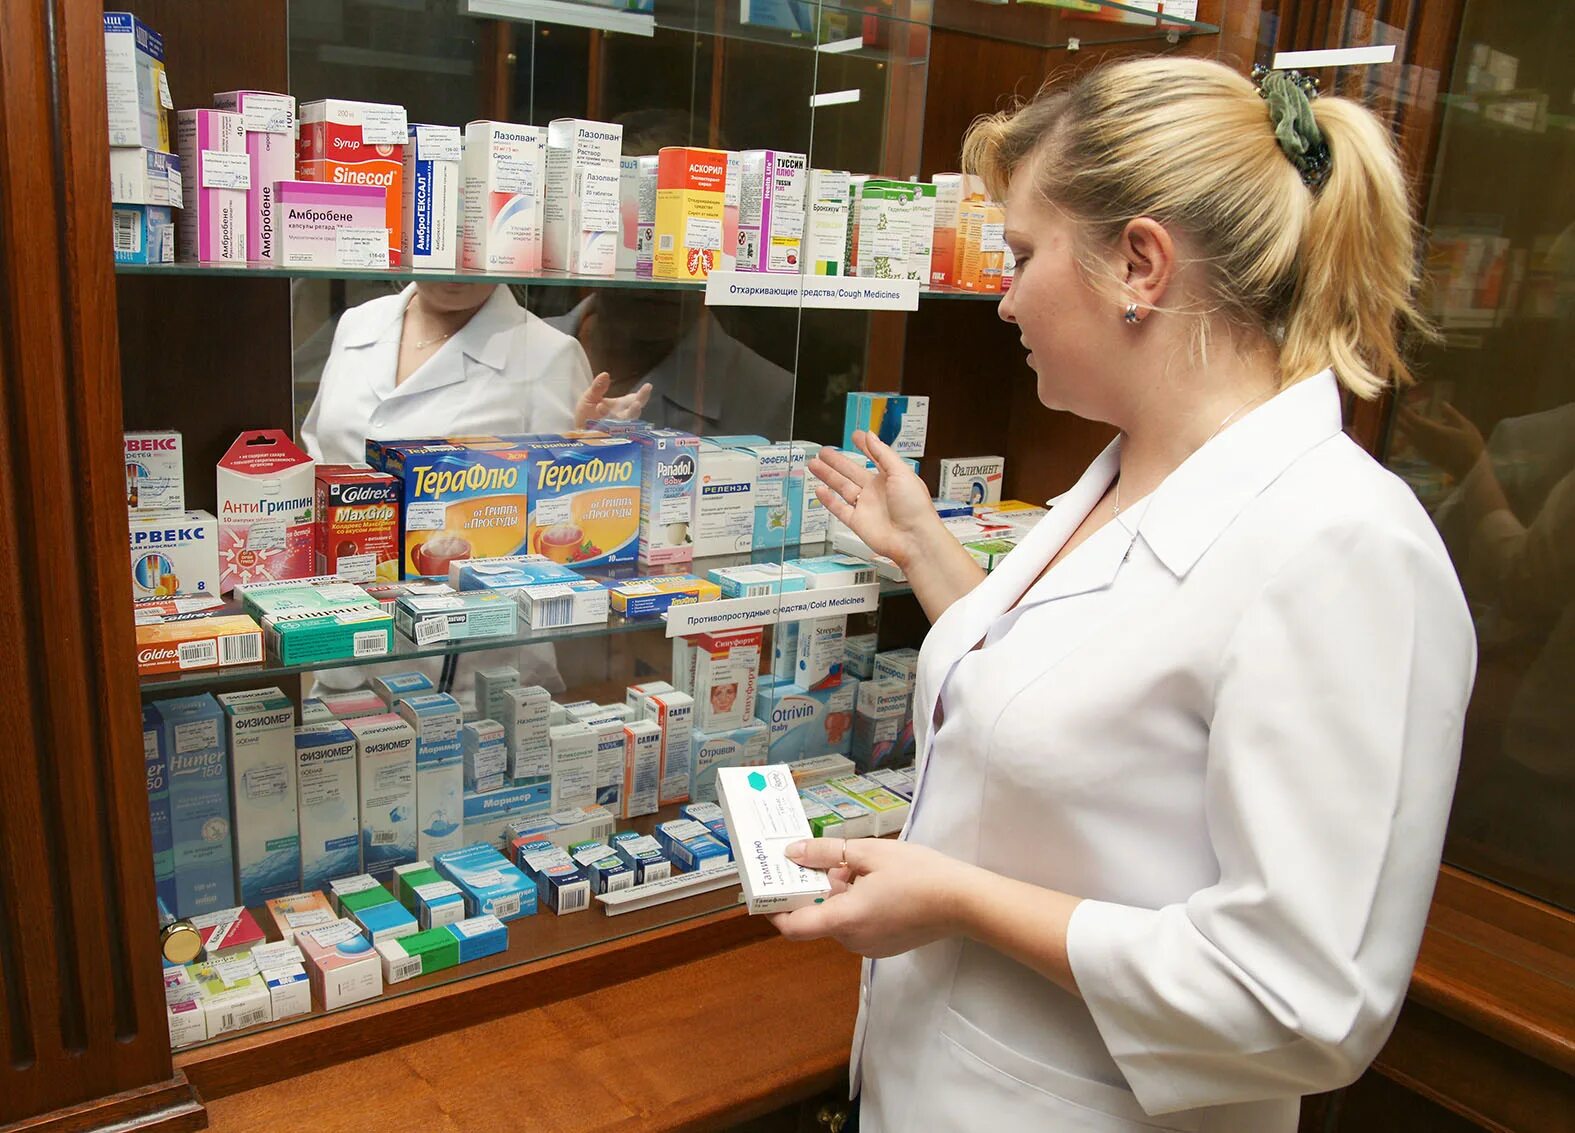 Лекарства. Аптека лекарства. Фармацевт продает лекарства. Фармацевт в Российской аптеке.